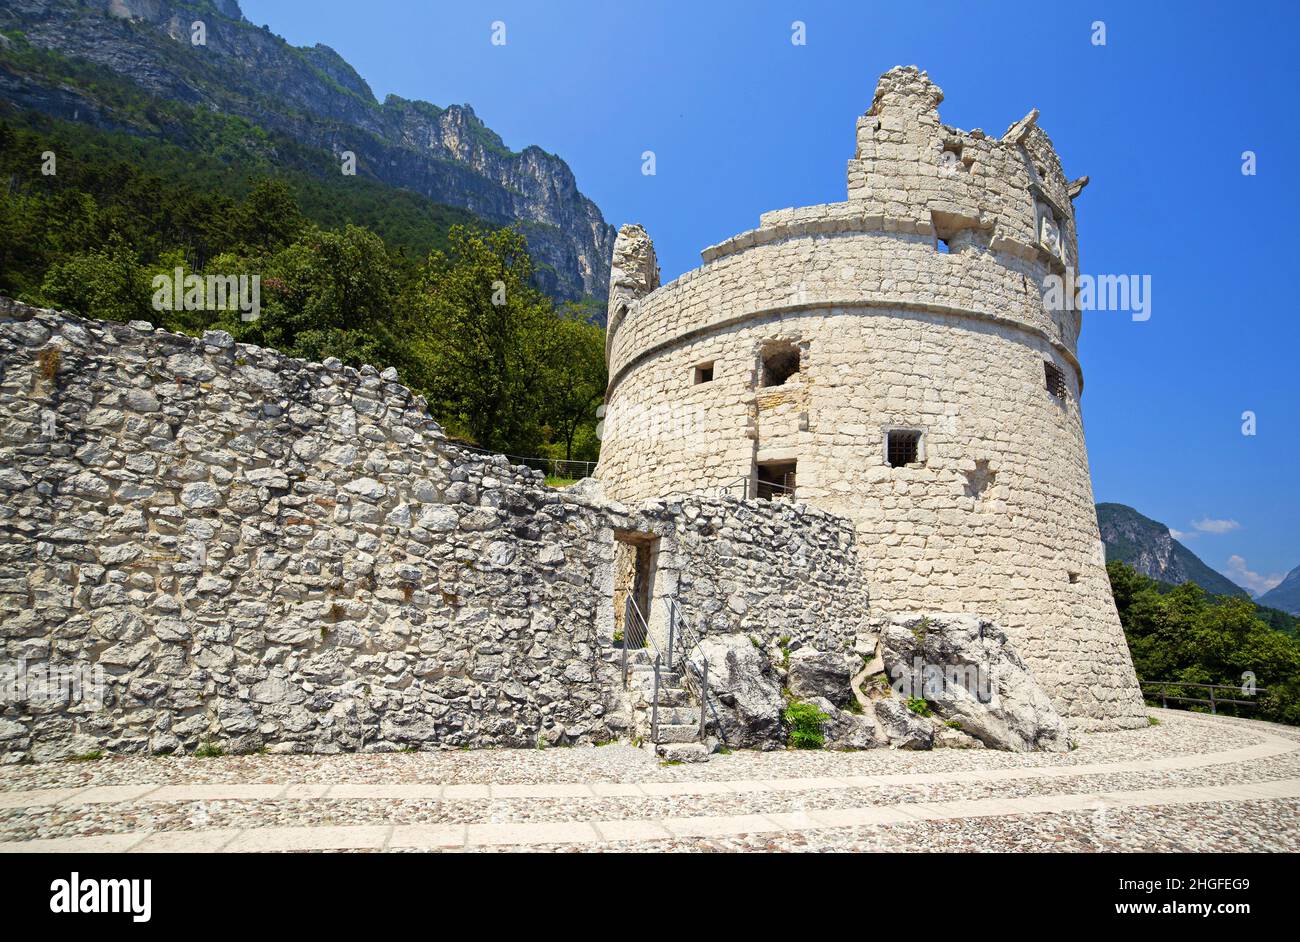 Italy, Riva del Garda ruins of the castle on the hill Stock Photo